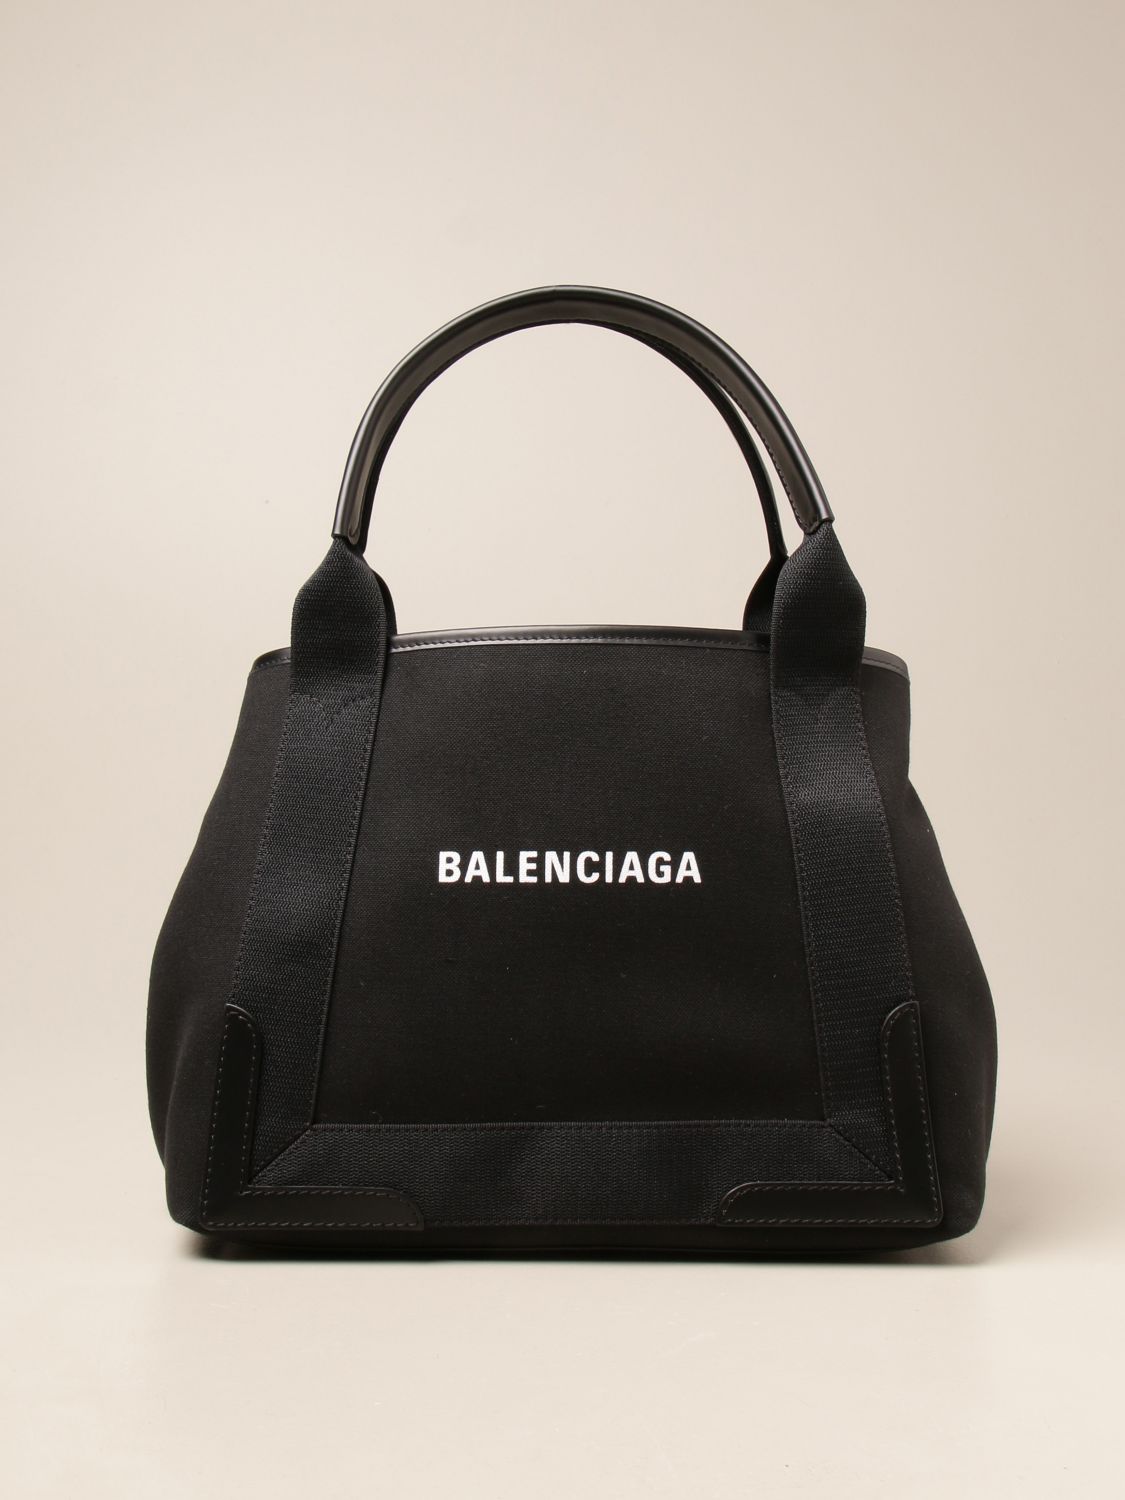 BALENCIAGA: Navy Cabas S bag in canvas with logo - Black | Tote Bags ...